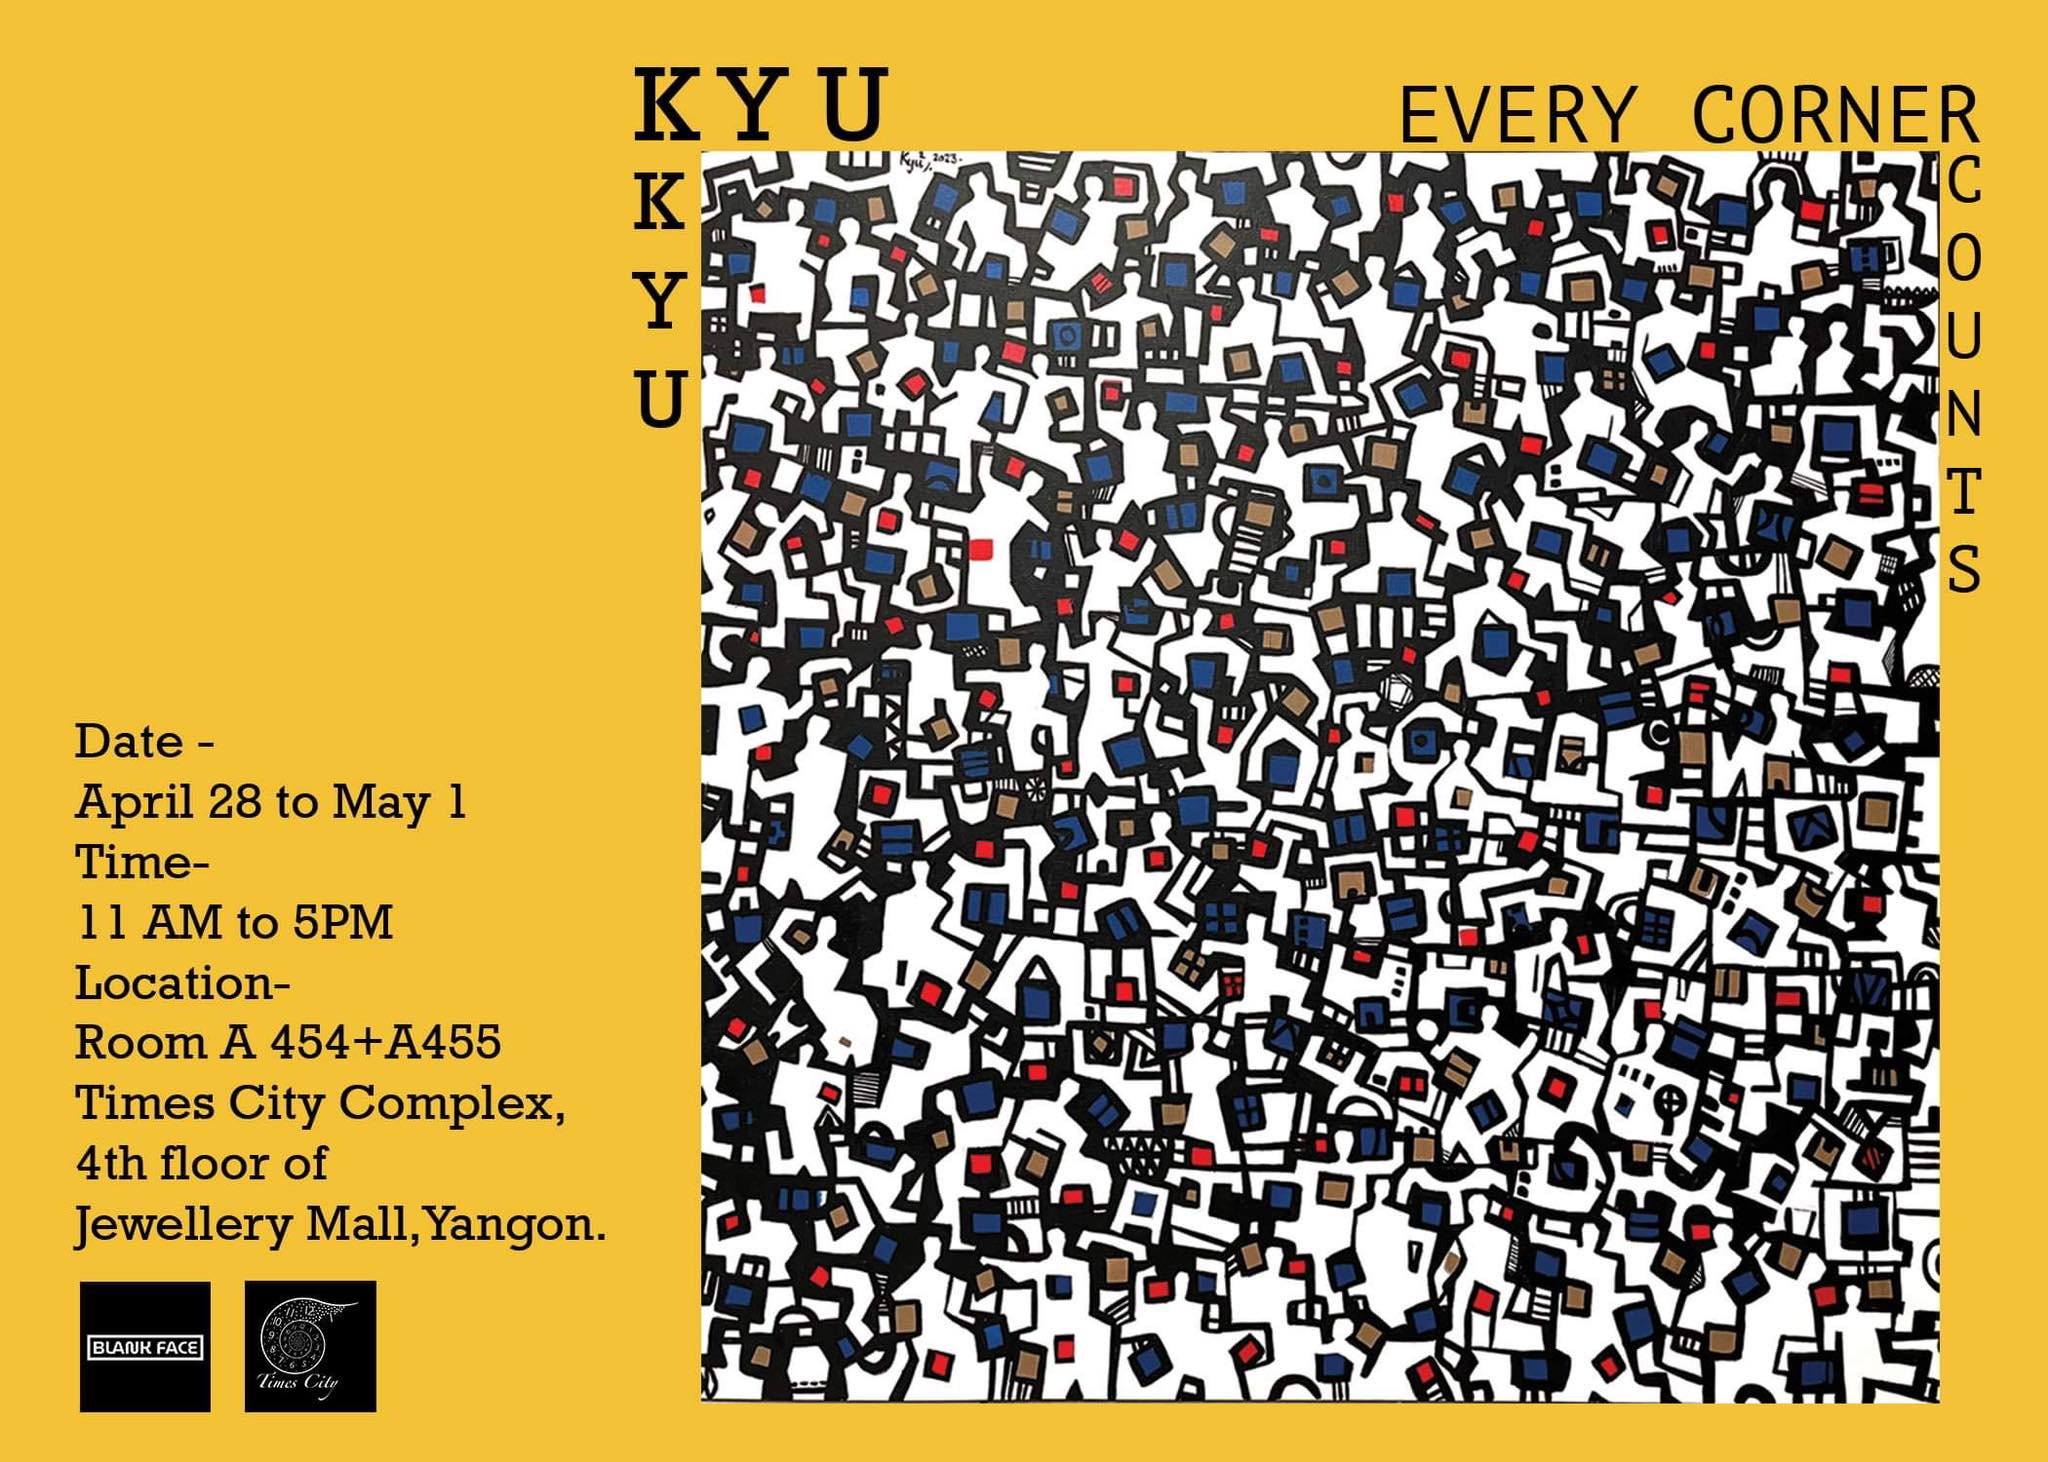 Kyu Kyu - Every corner counts